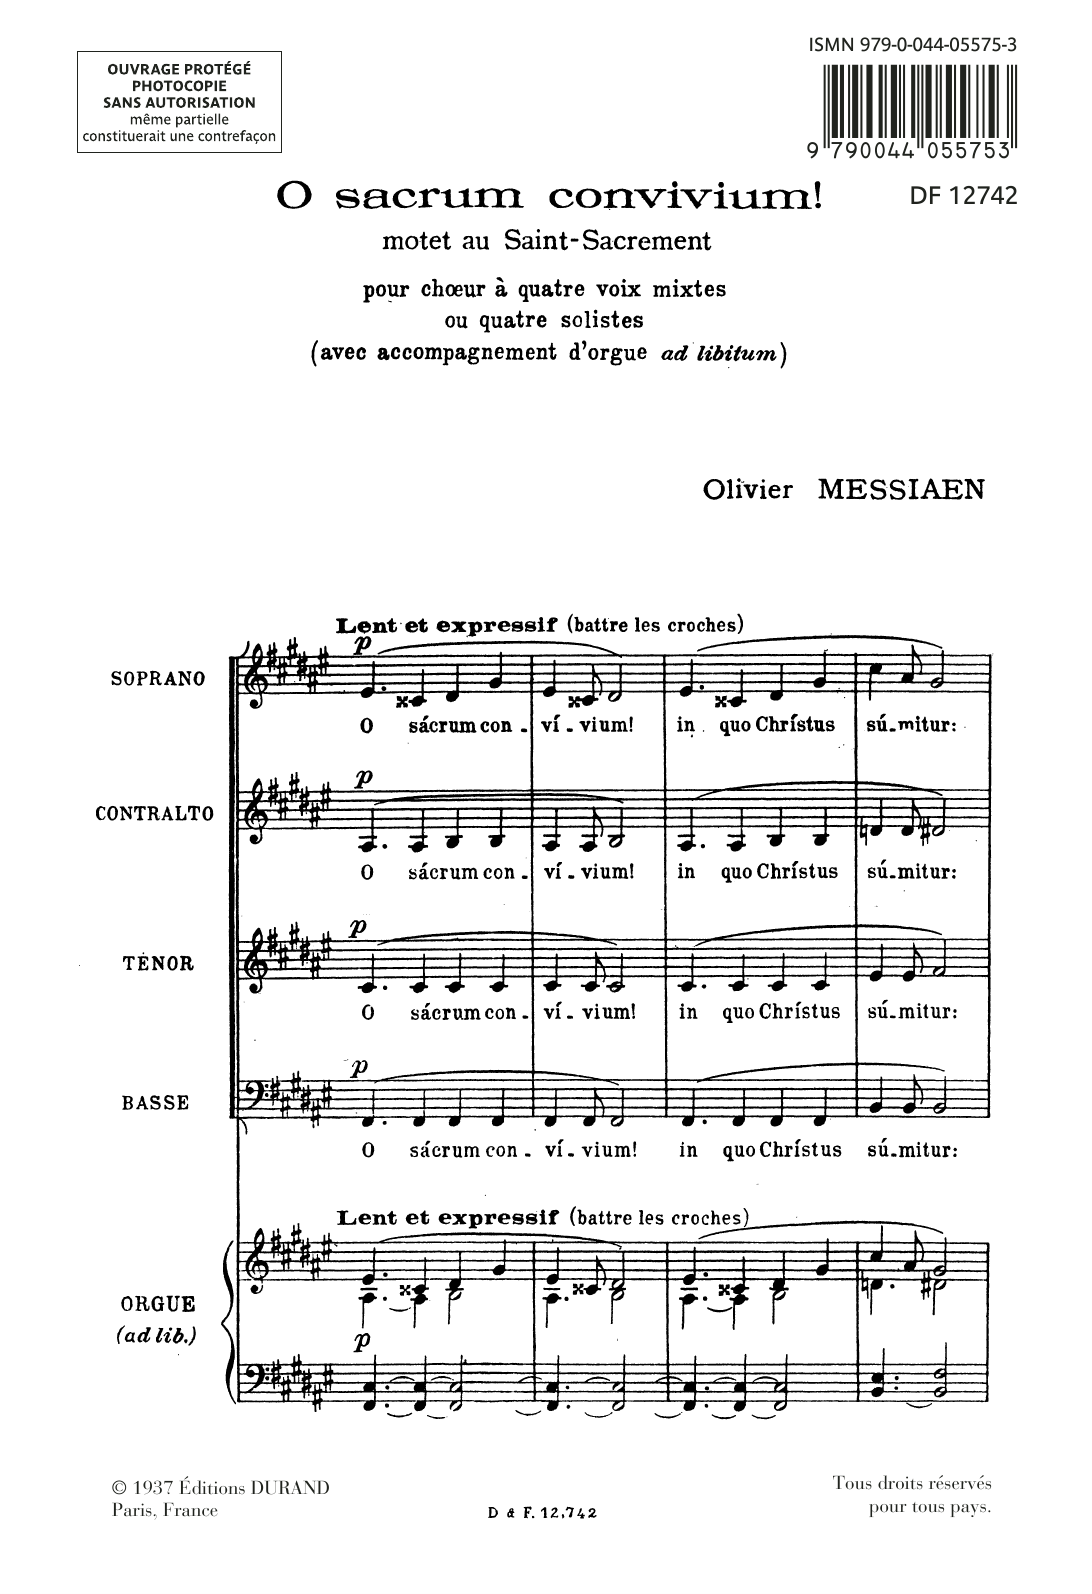 Olivier Messiaen O Sacrum Convivium! Sheet Music Notes & Chords for SATB Choir - Download or Print PDF